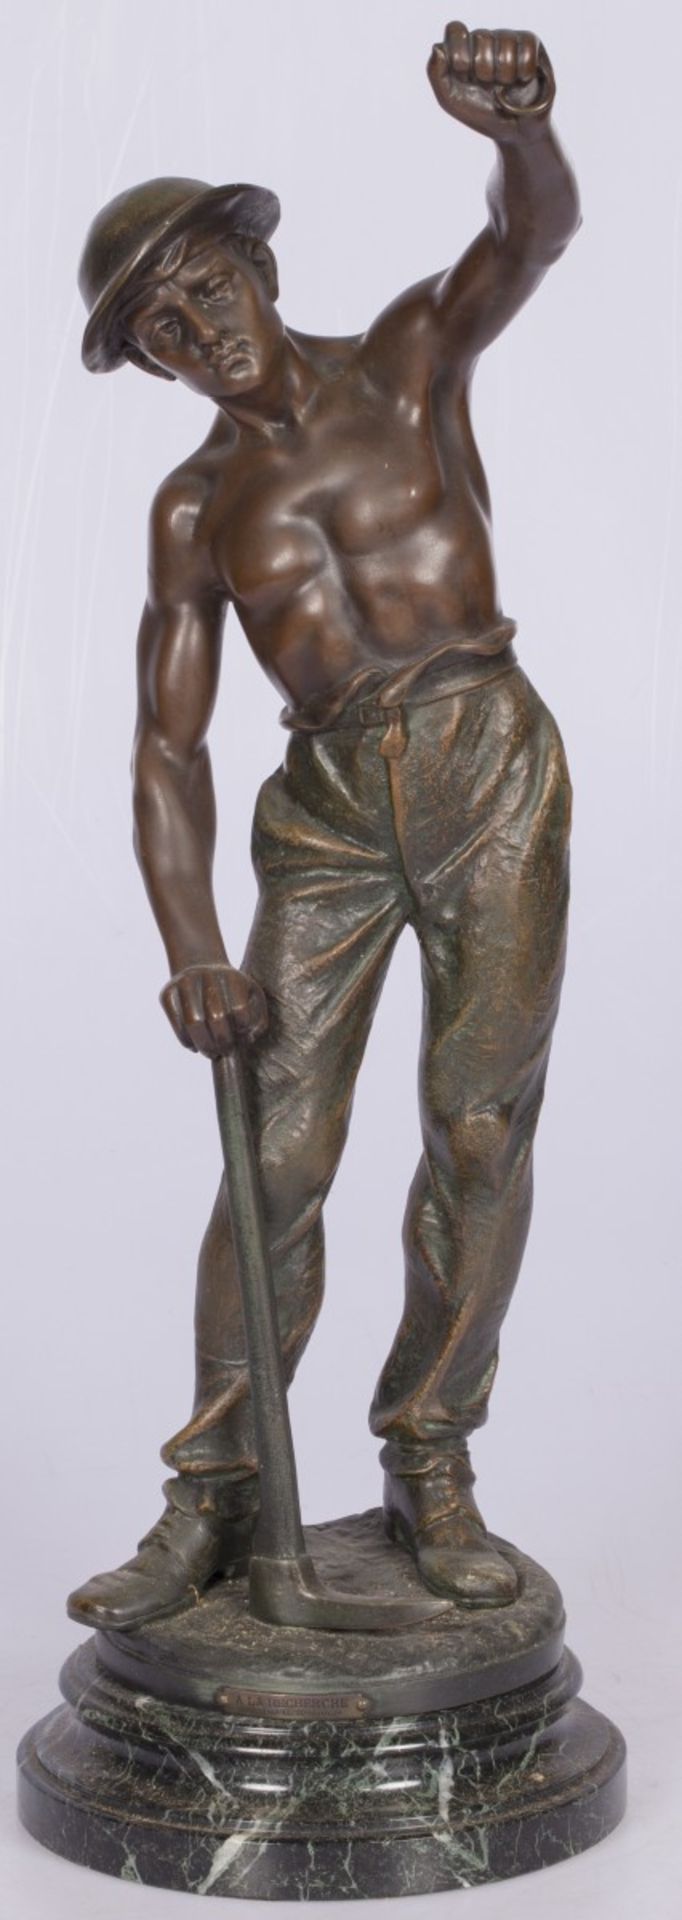 A ZAMAC sculpture of a mine worker, France, 1st half 20th century.